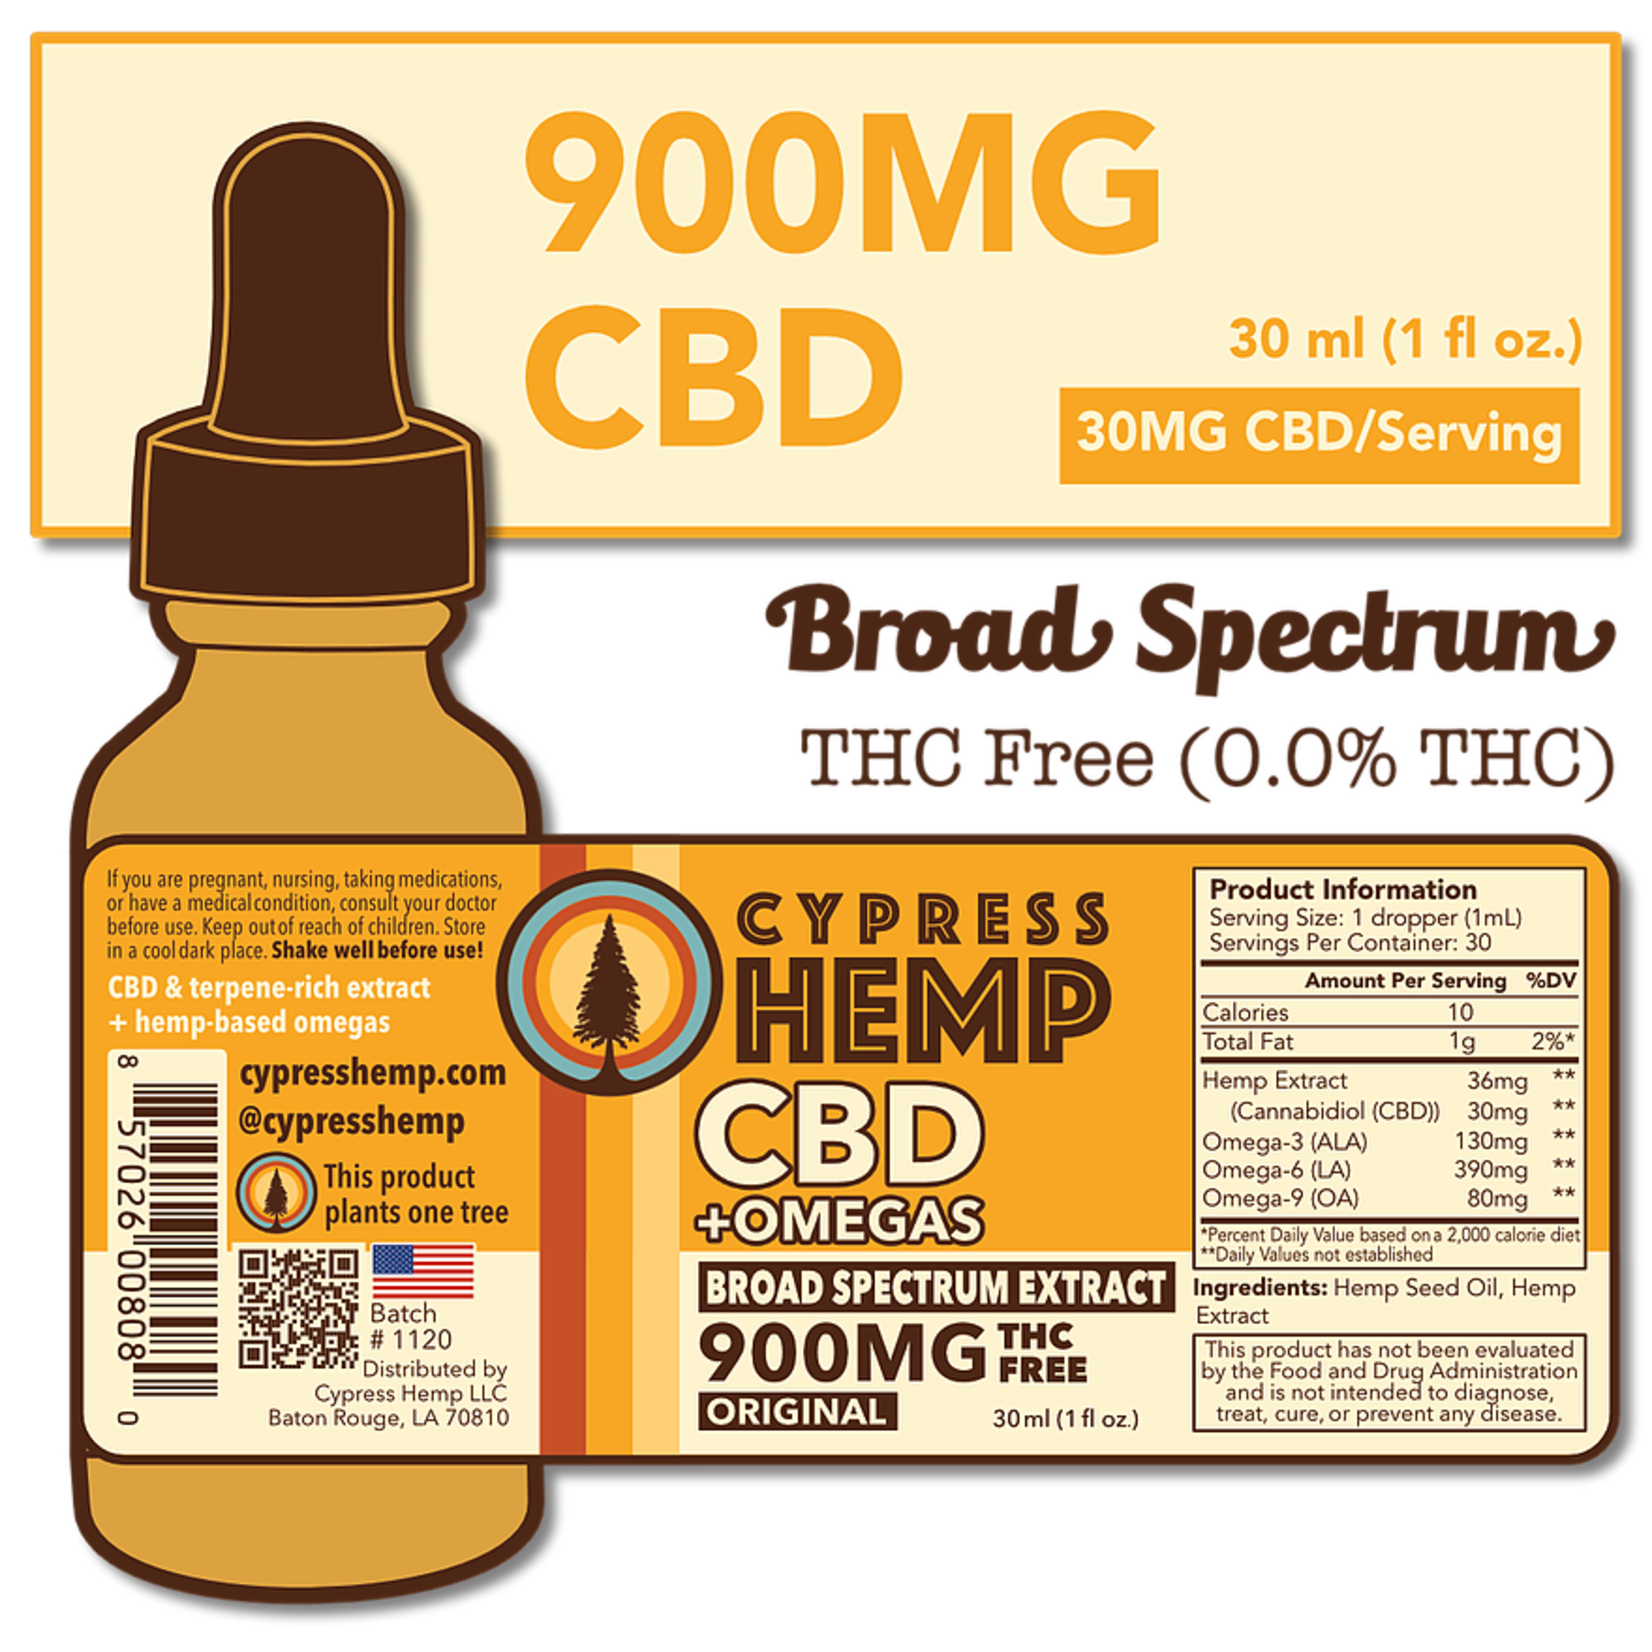 Cypress Hemp CBD + Omegas Broad Spectrum 900mg